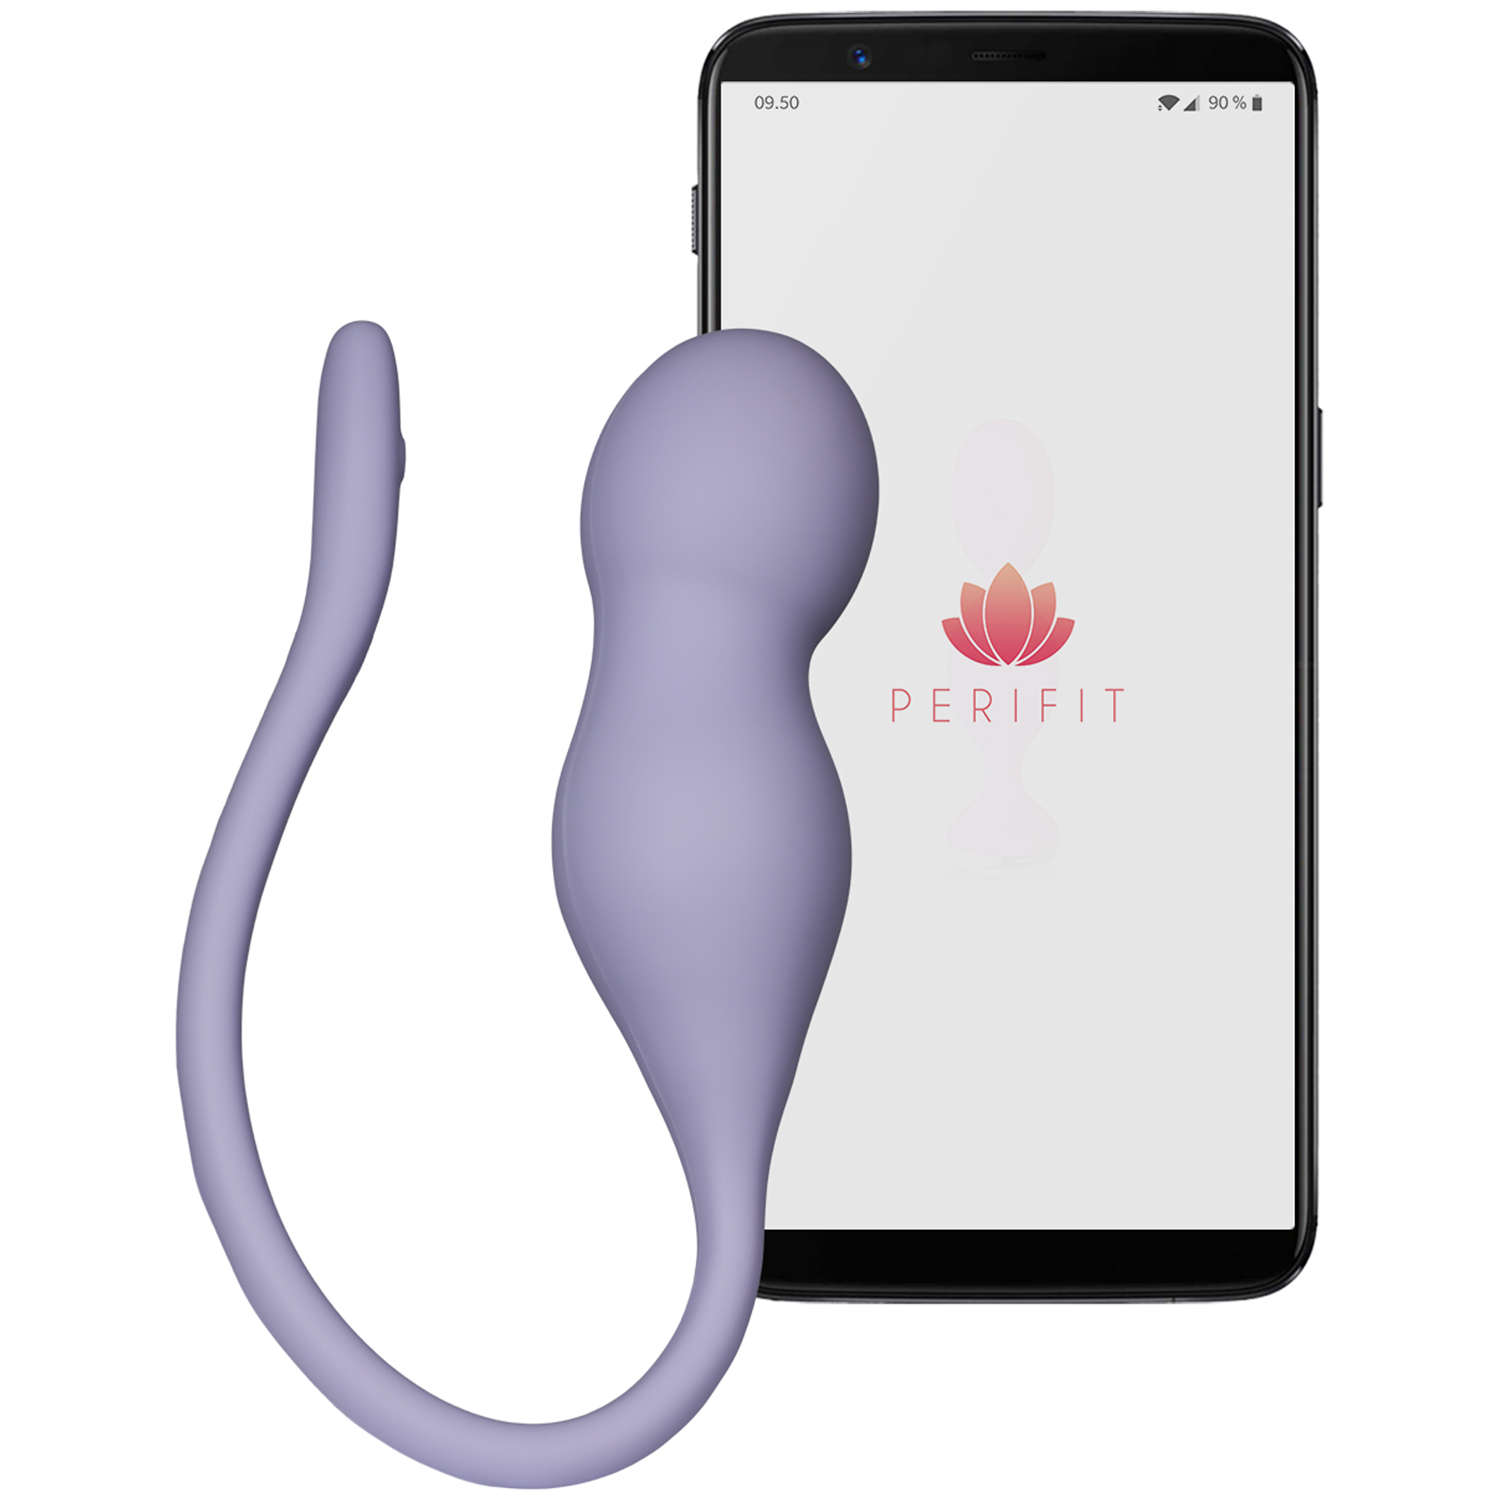 Perifit Care+ Bækkenbundstræner - Purple thumbnail